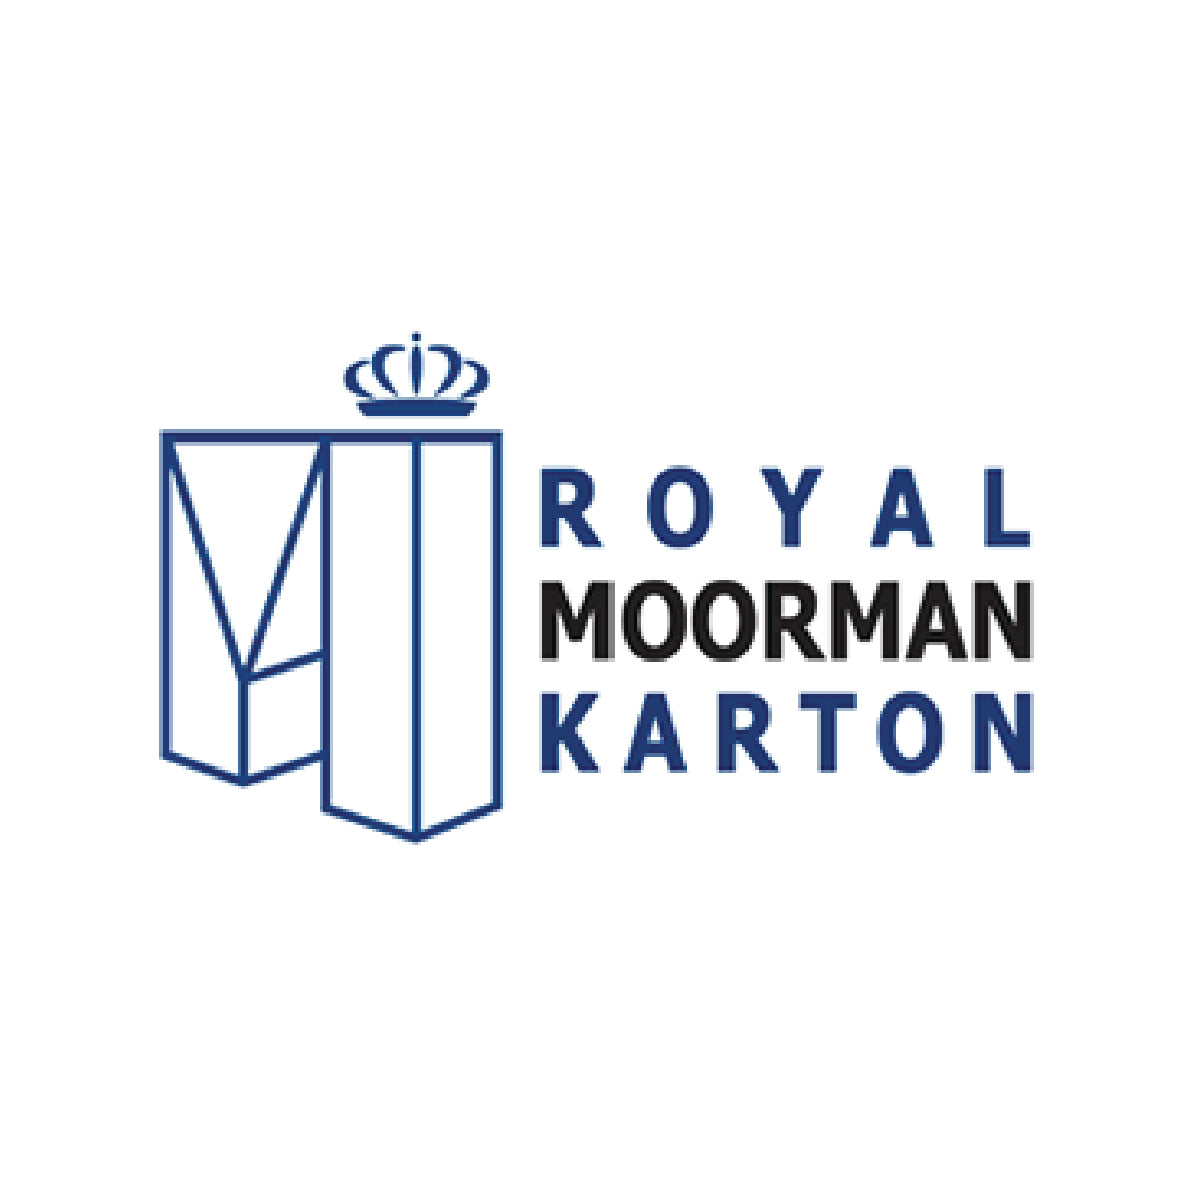 Royal Moorman Karton